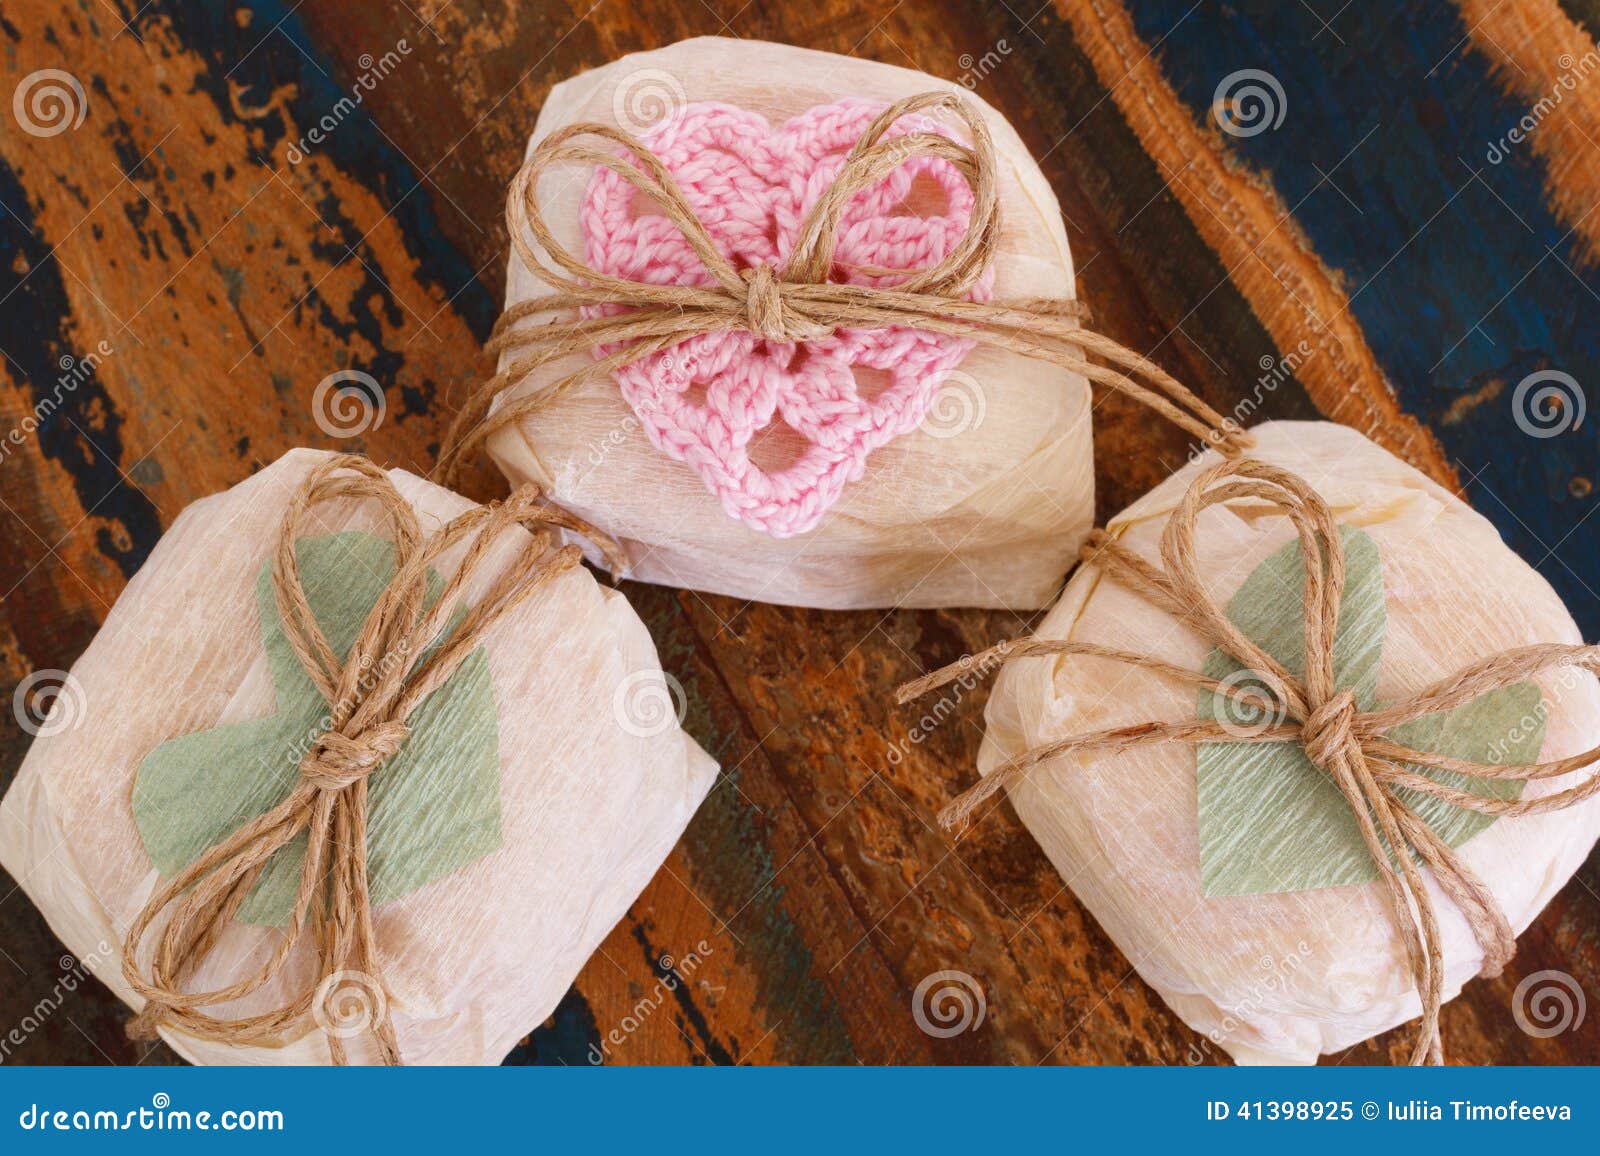 brazilian wedding sweet bem casado with crochet and paper heart